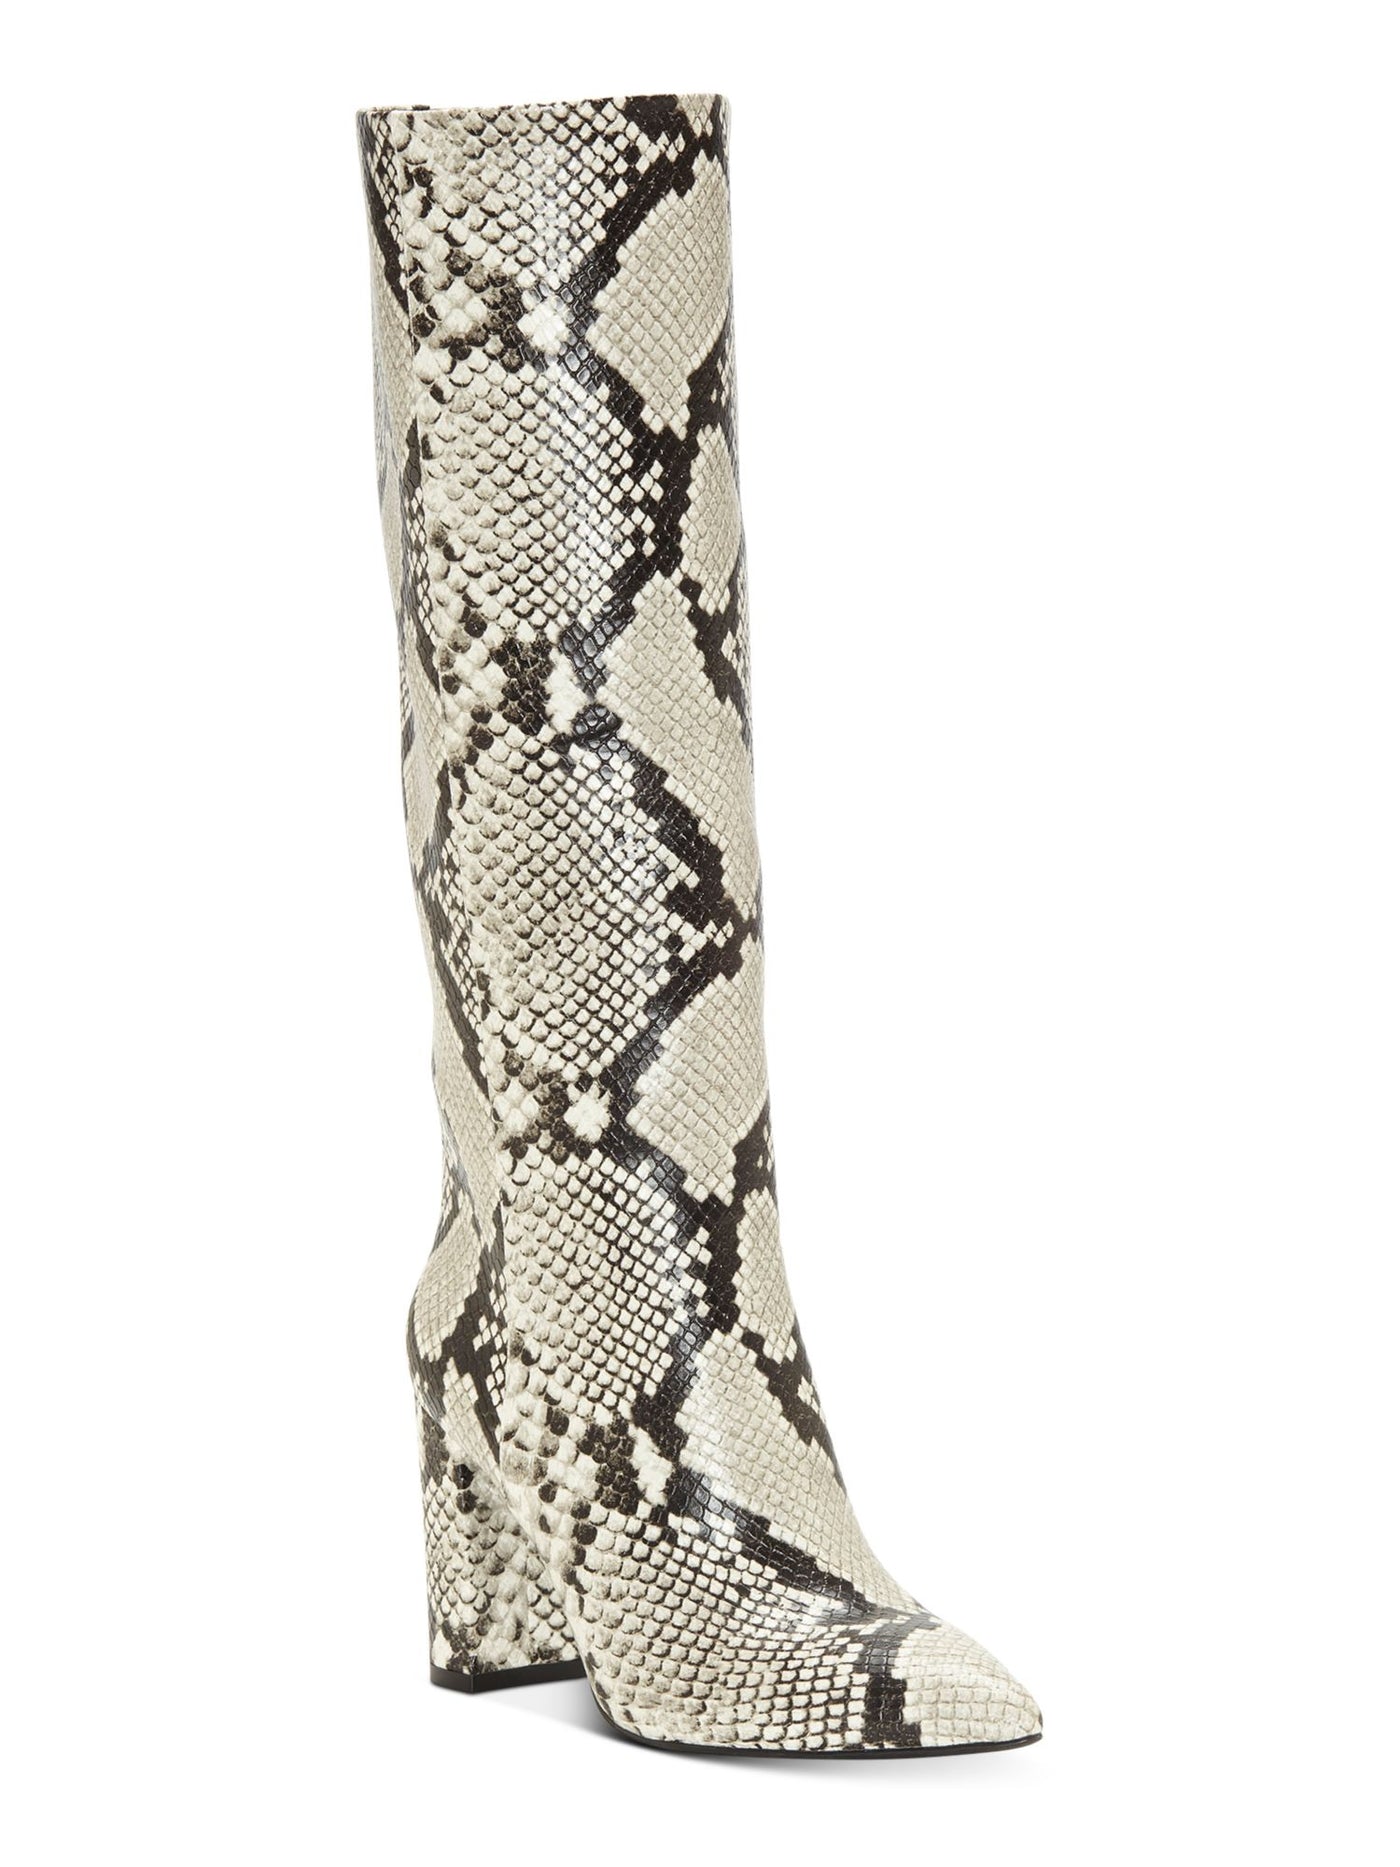 INC Womens Beige Animal Print Pointed Toe Block Heel Zip-Up Dress Boots 6